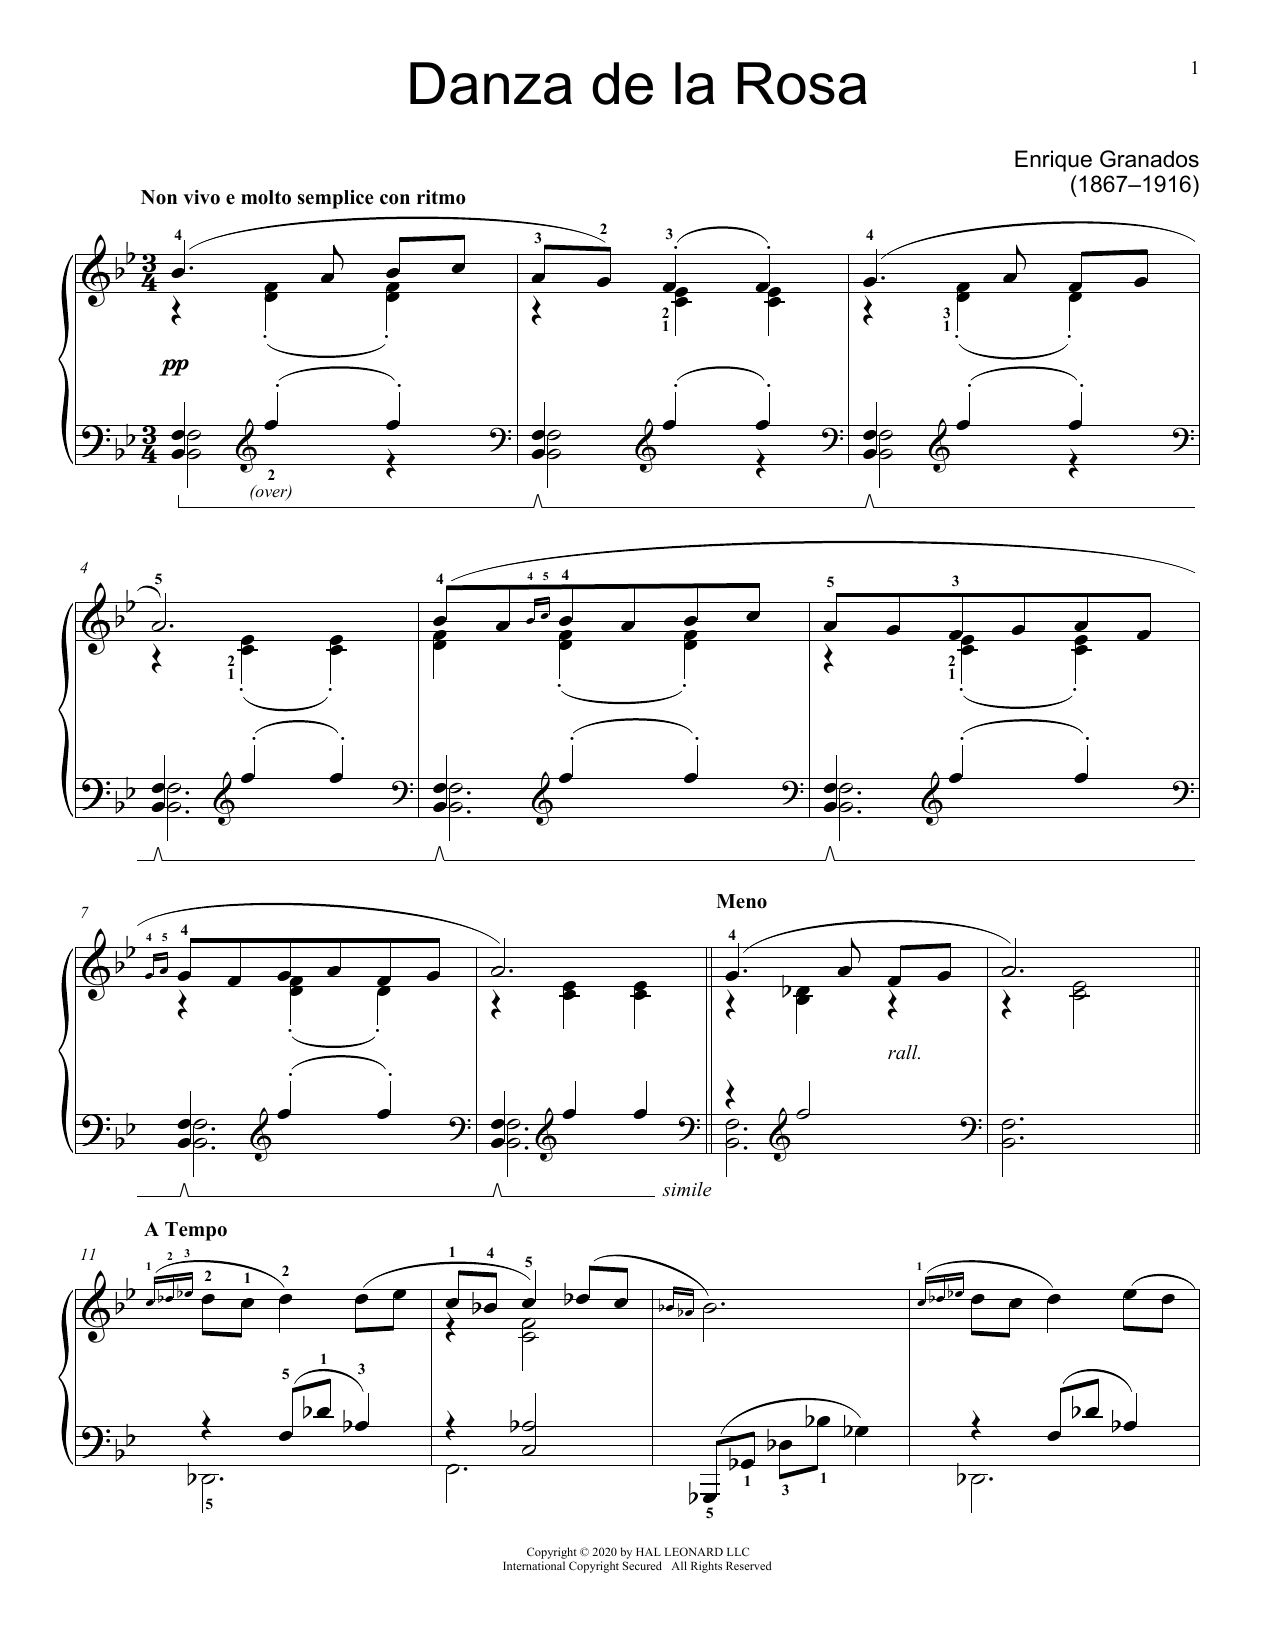 Download Enrique Granados Danza de la Rosa Sheet Music and learn how to play Educational Piano PDF digital score in minutes